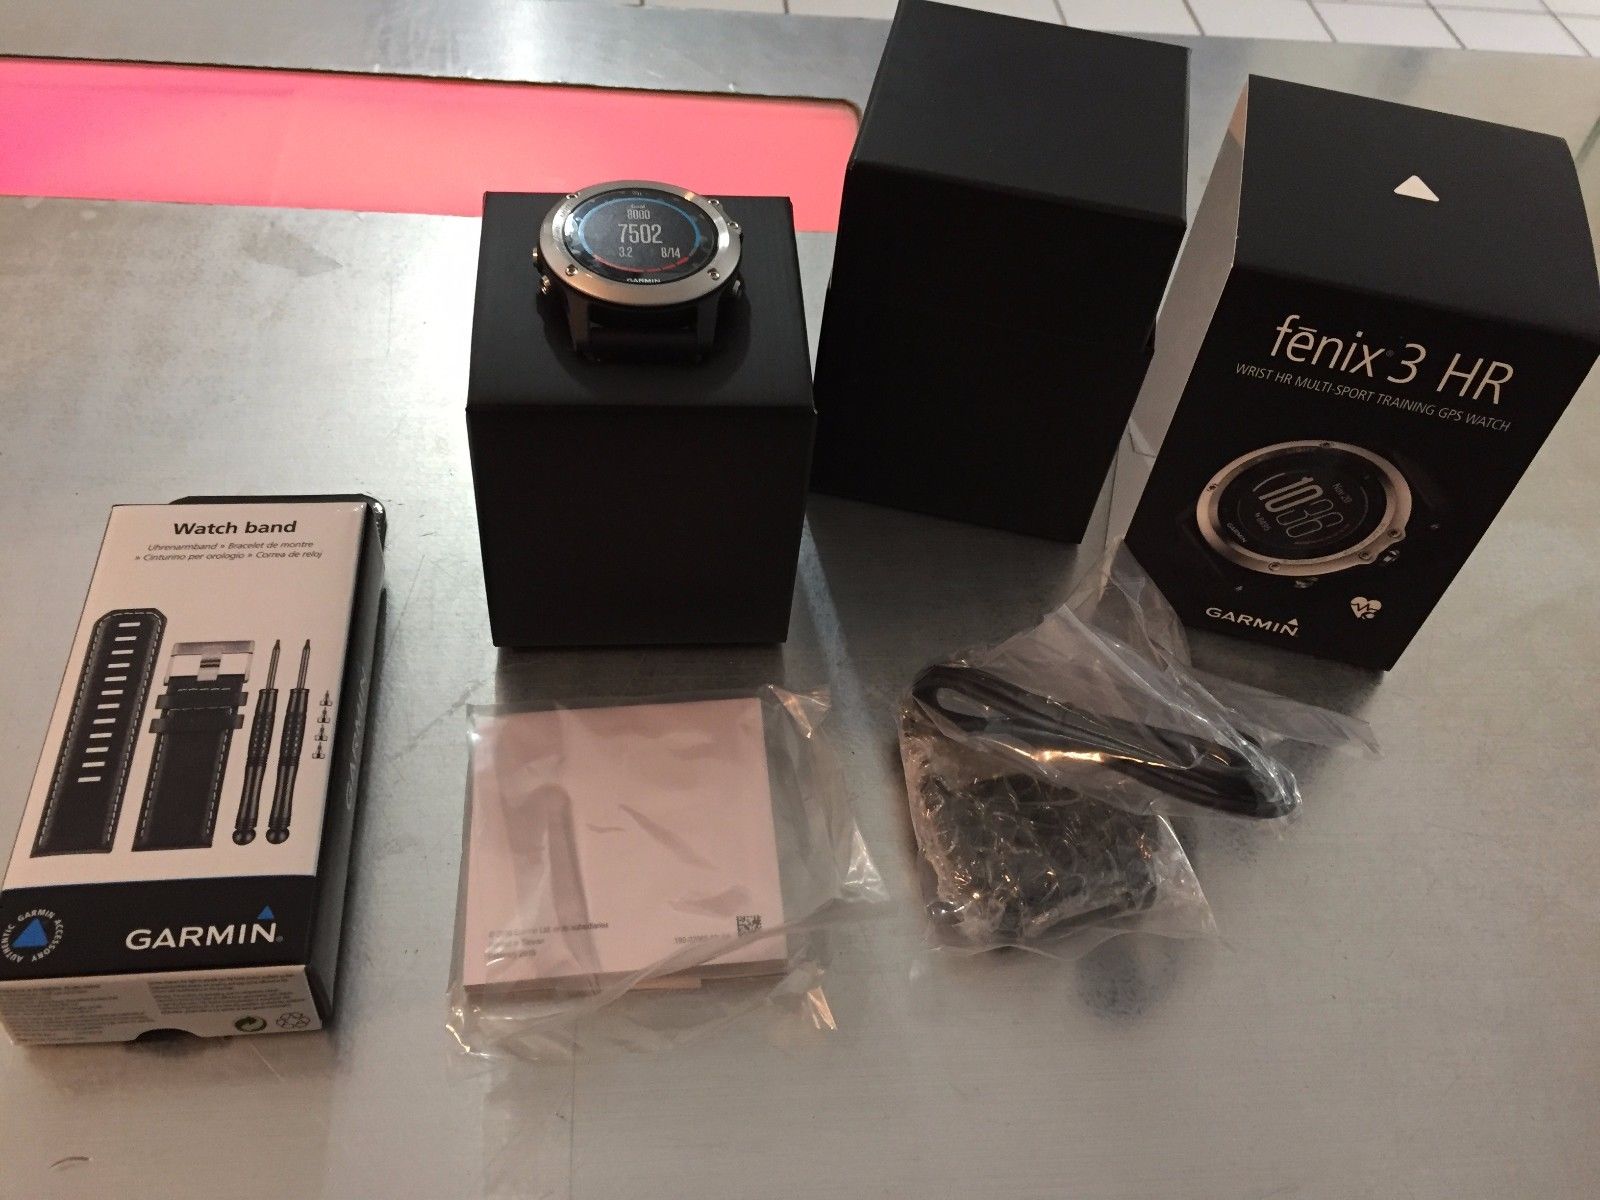 Garmin fenix 3 HR GPS-Multisport-Smartwatch 1 Tag getragen mit extra armband